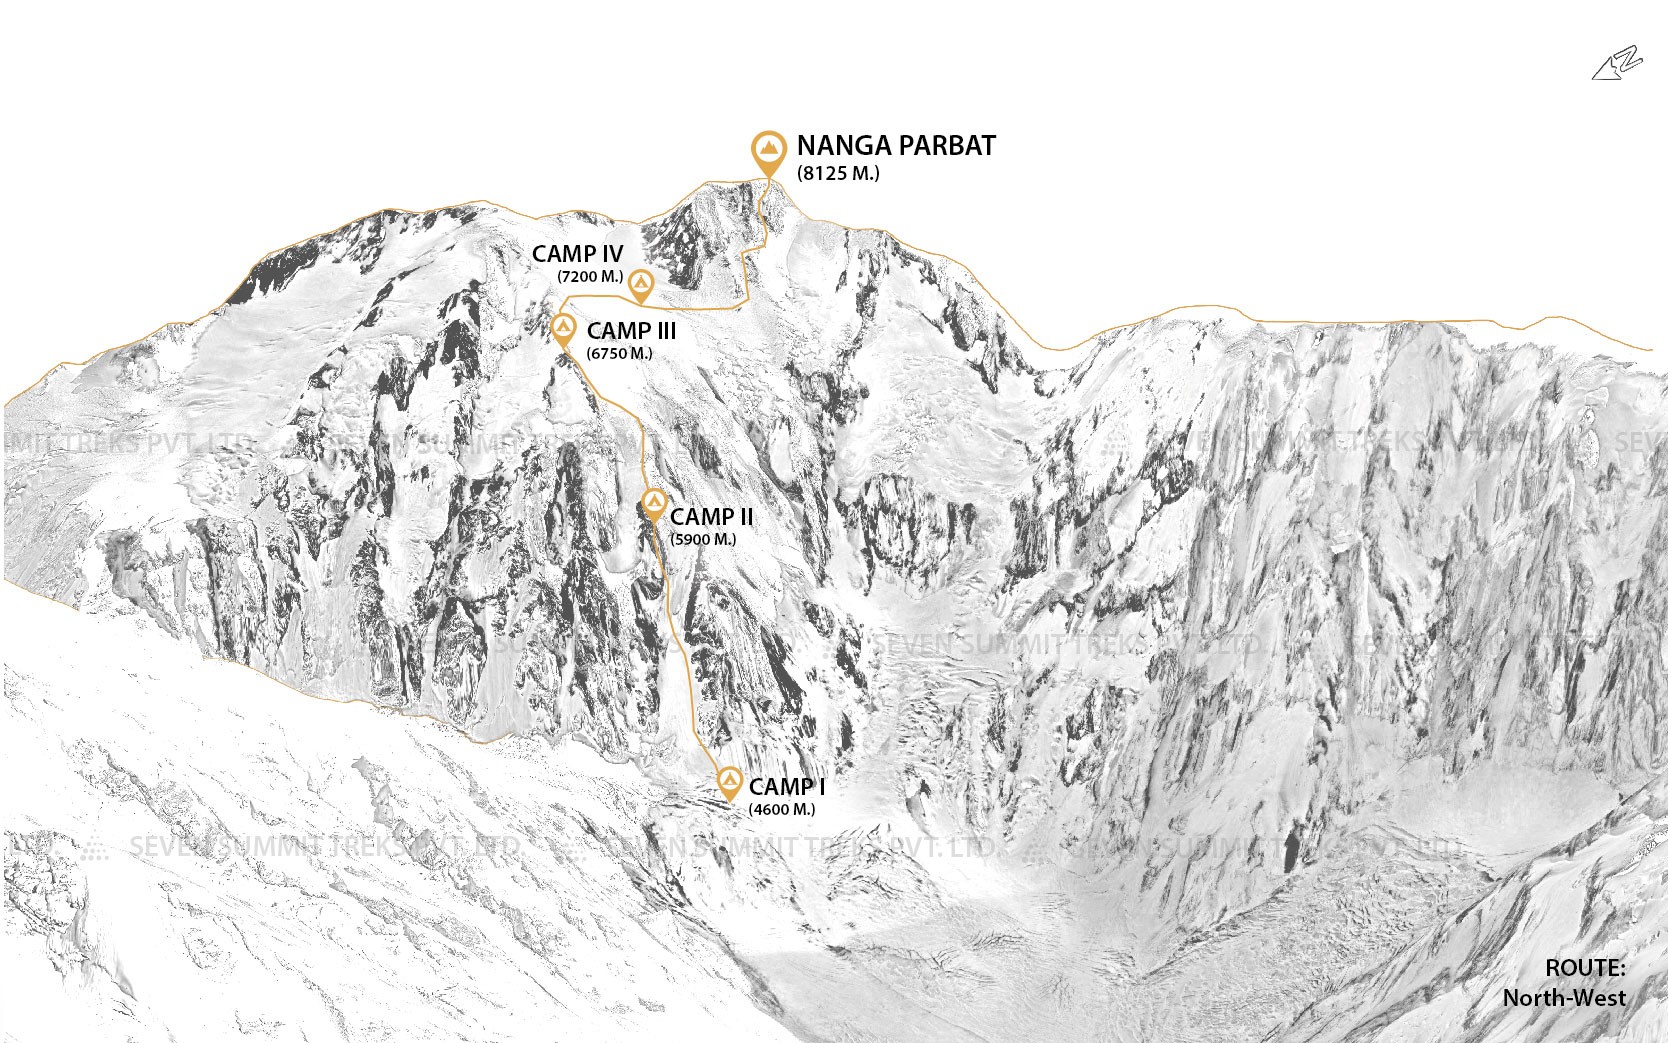 MT. NANGA PARBAT EXPEDITION (8125M)